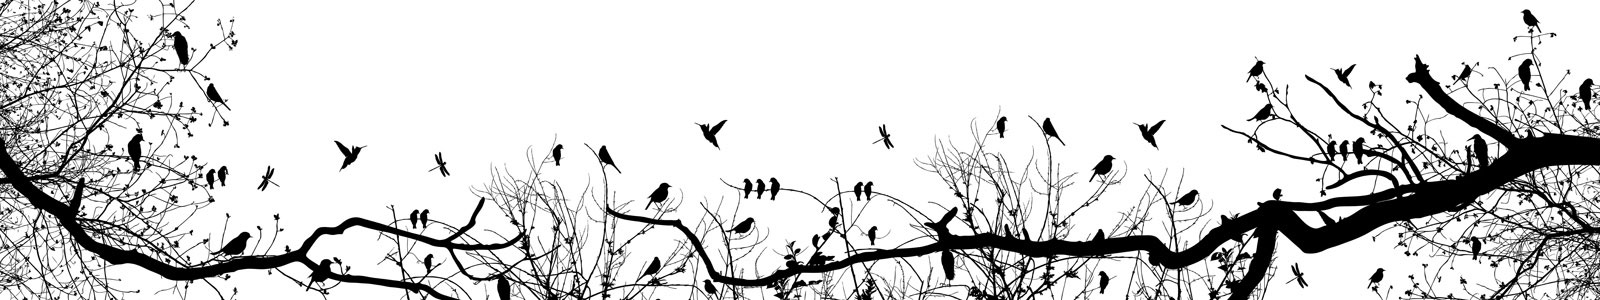 №5740 - Силуэты птиц на деревьях и кустах